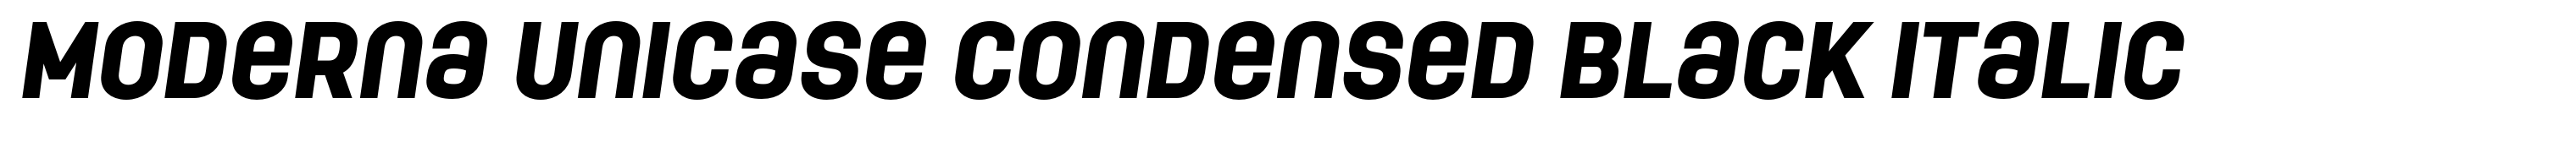 Moderna Unicase Condensed Black Italic